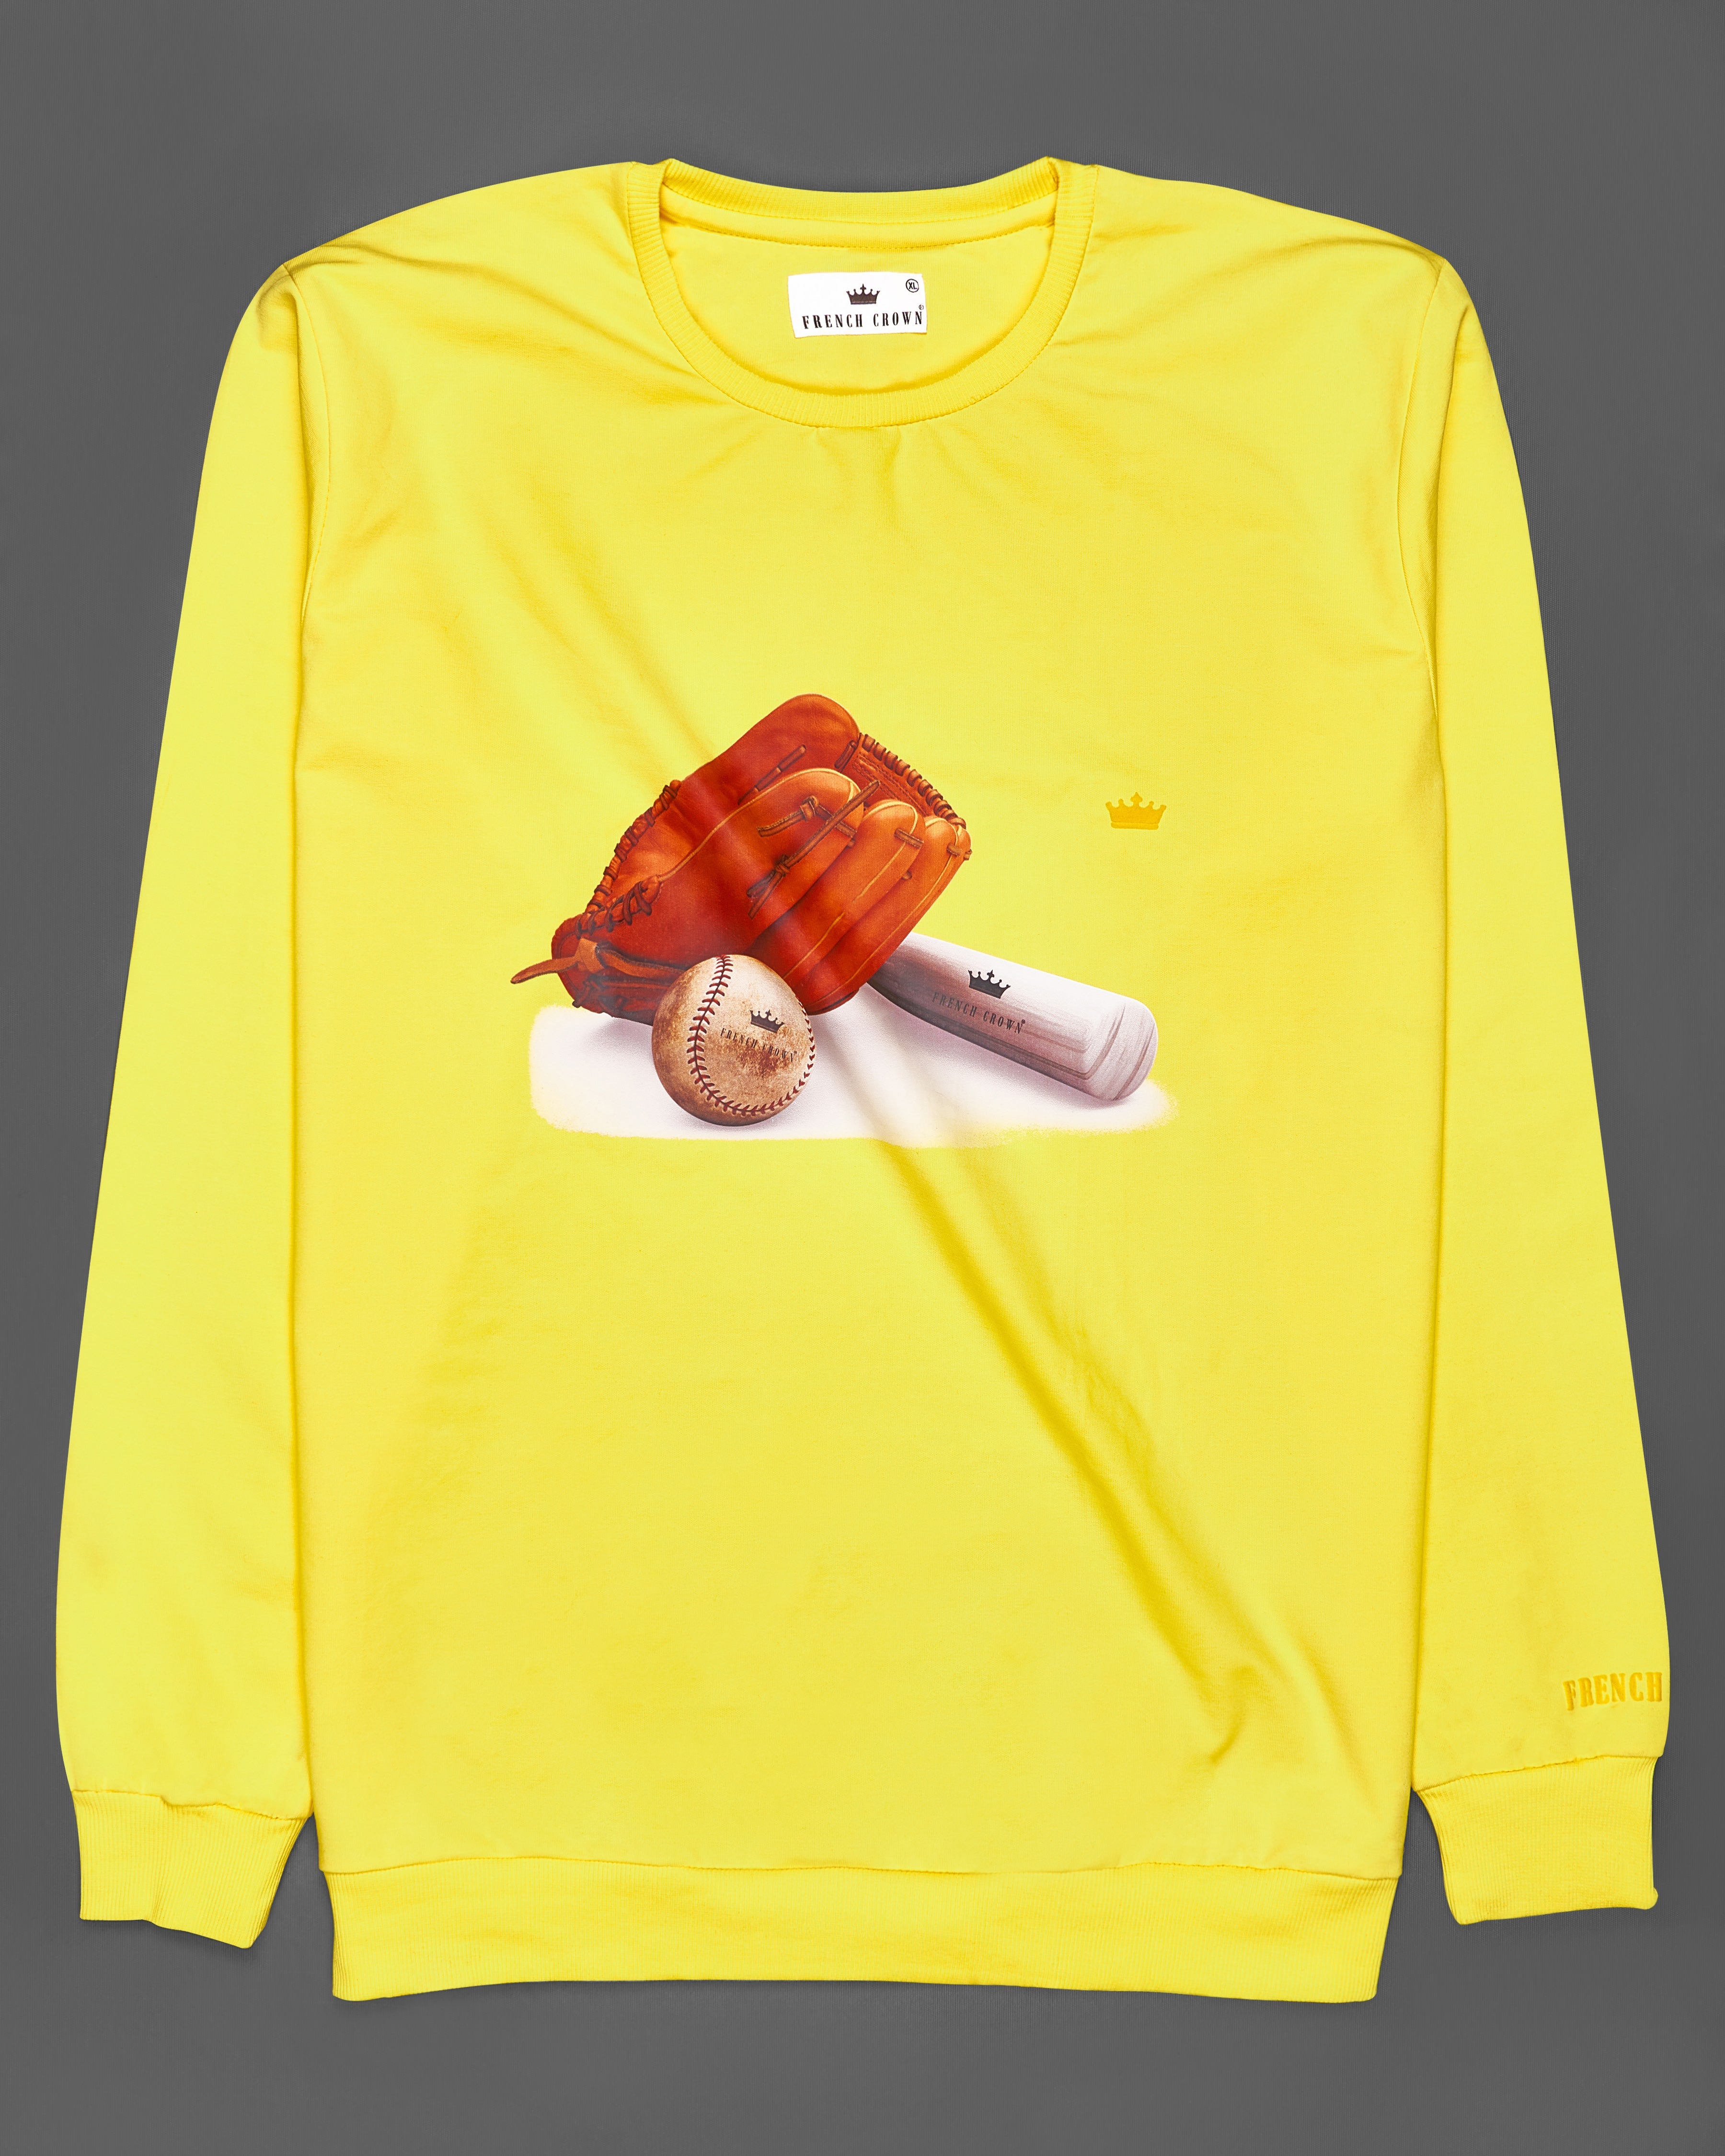 Dandelion Yellow Baseball Printed Premium Organic Cotton Sweatshirt TS061-W01-S, TS061-W01-M, TS061-W01-L, TS061-W01-XL, TS061-W01-XXL